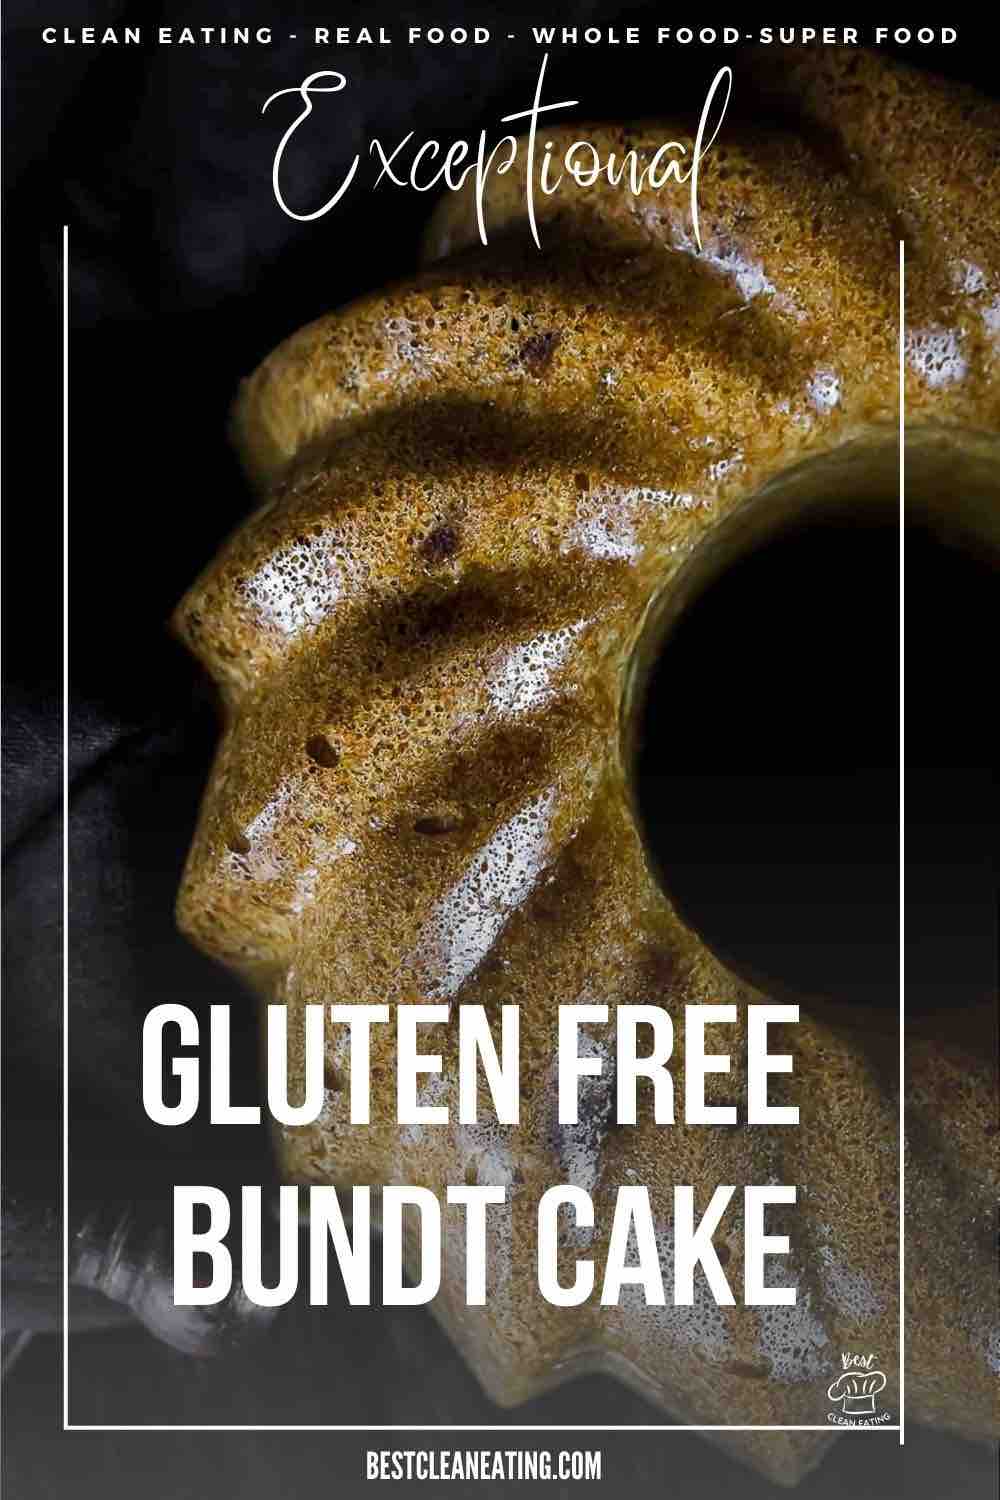 An image of a gluten - free bundt cake.